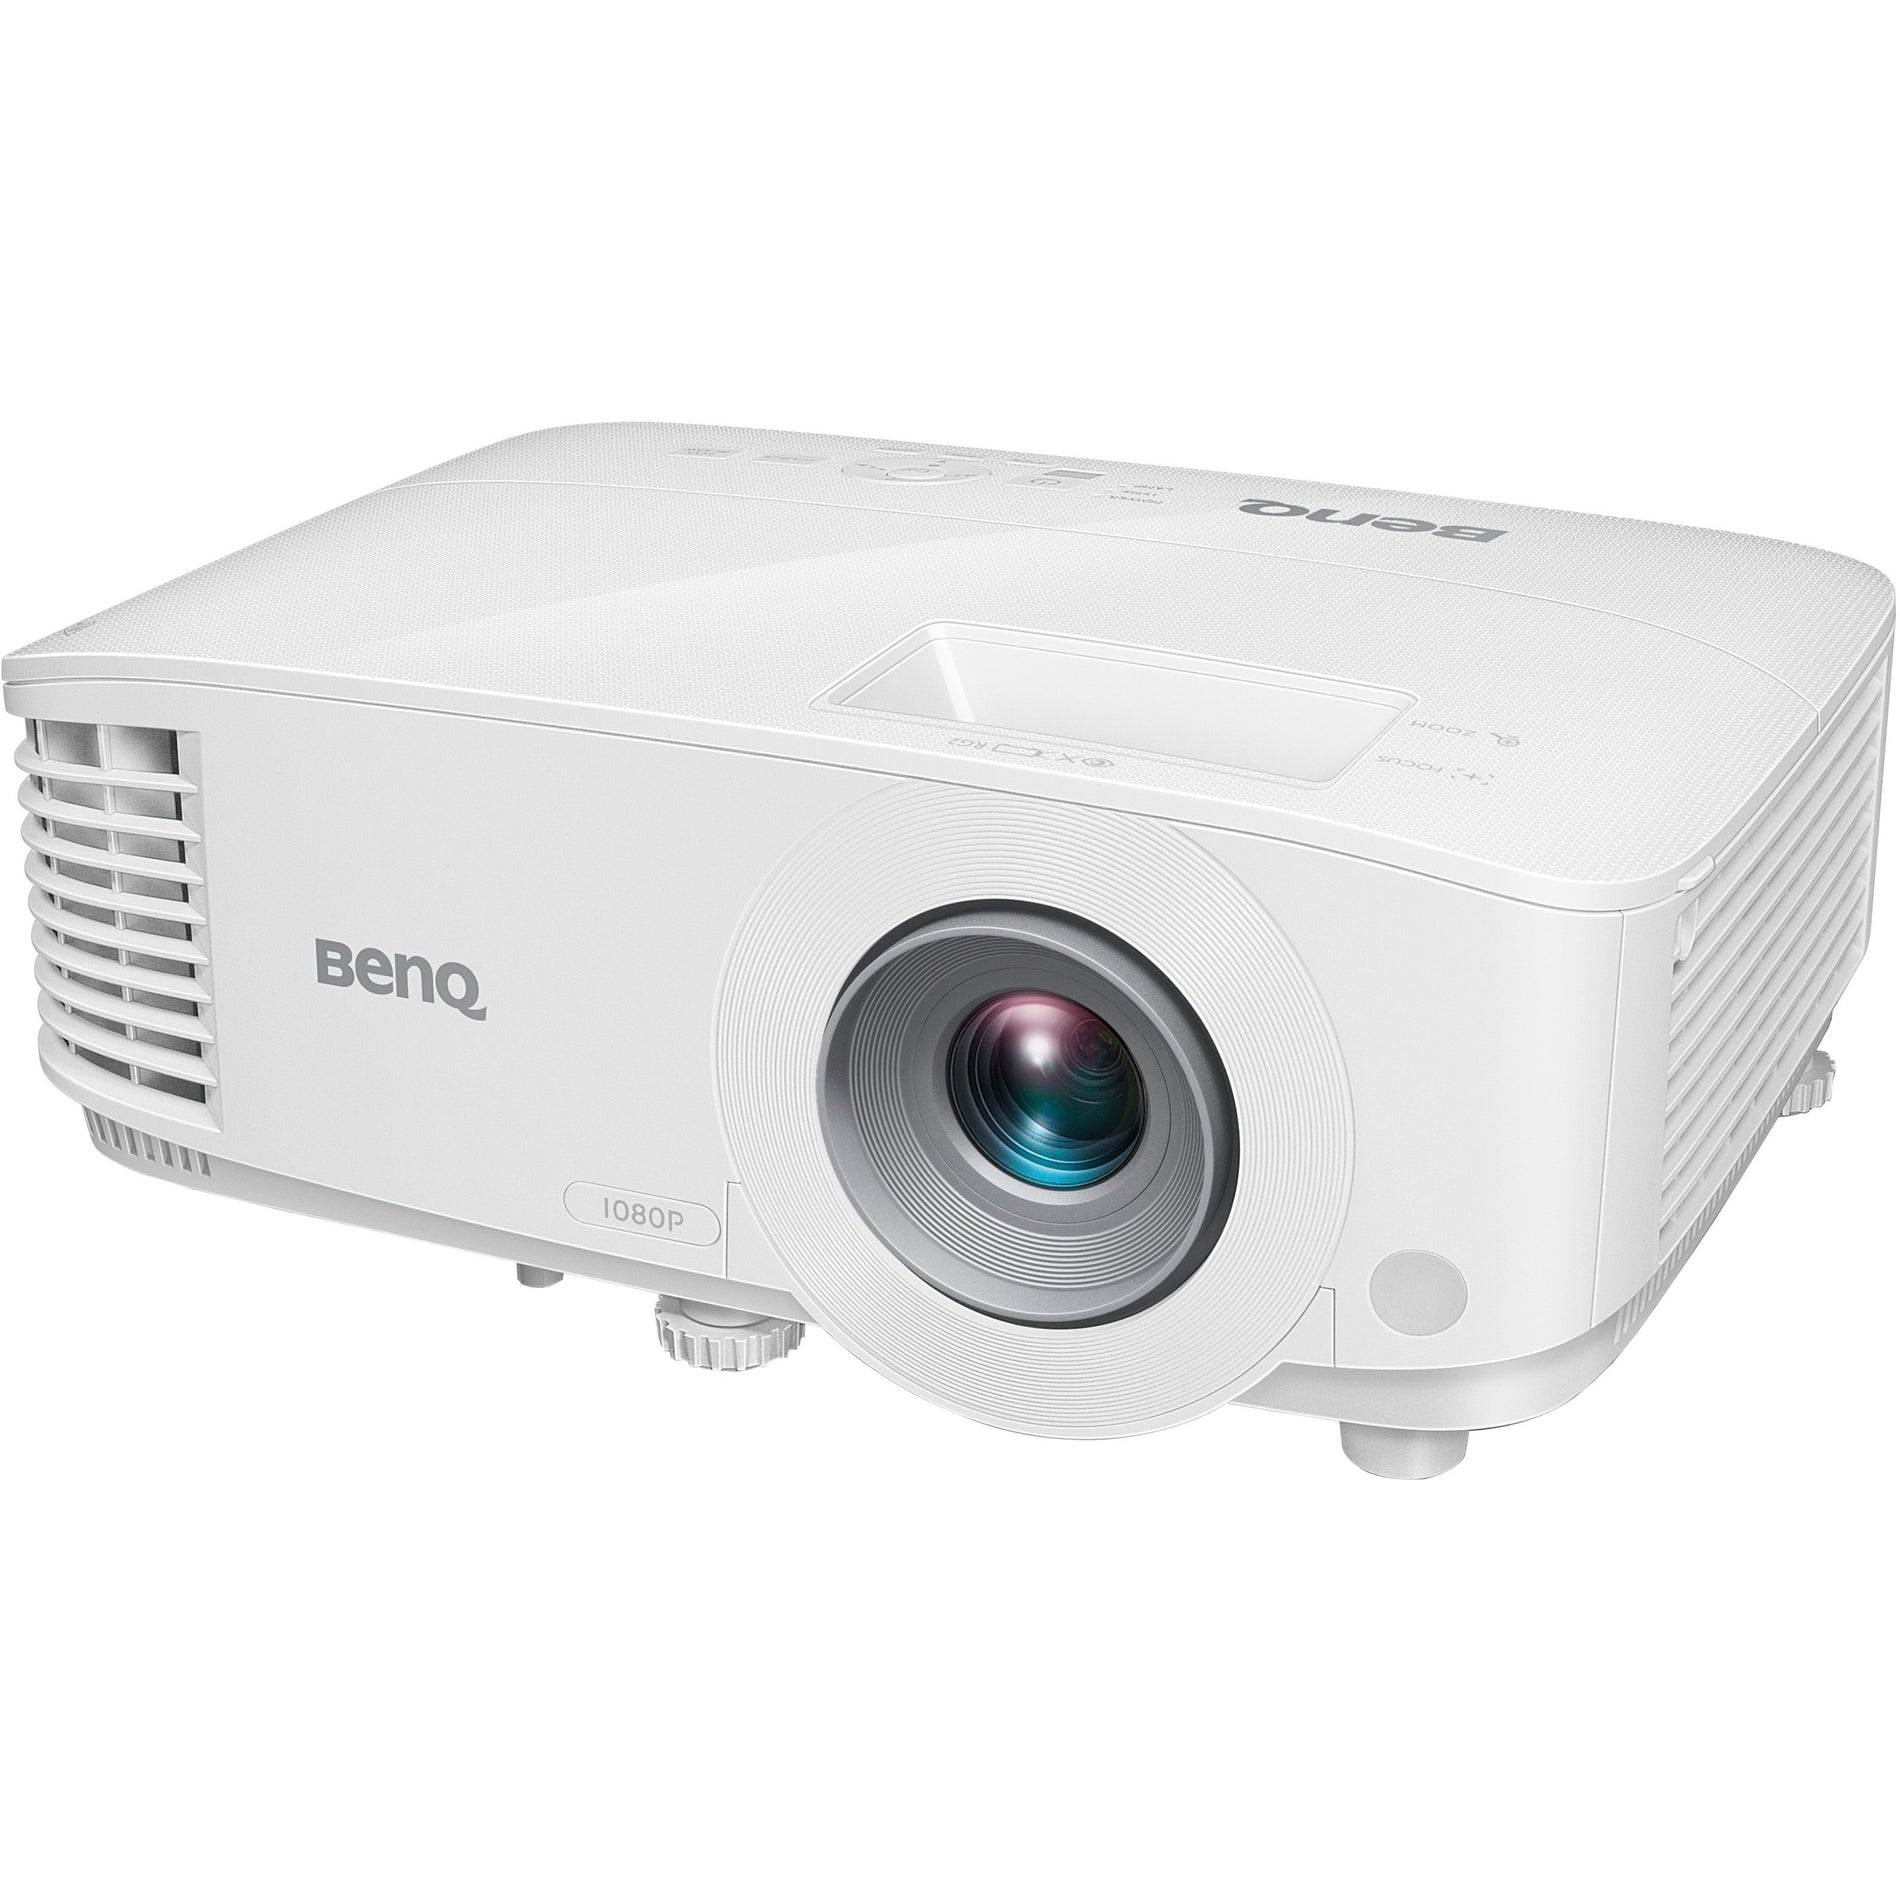 BenQ MH733 3D Ready DLP Projector - Full HD, 16:9, 4000lm, 16,000:1 Contrast Ratio